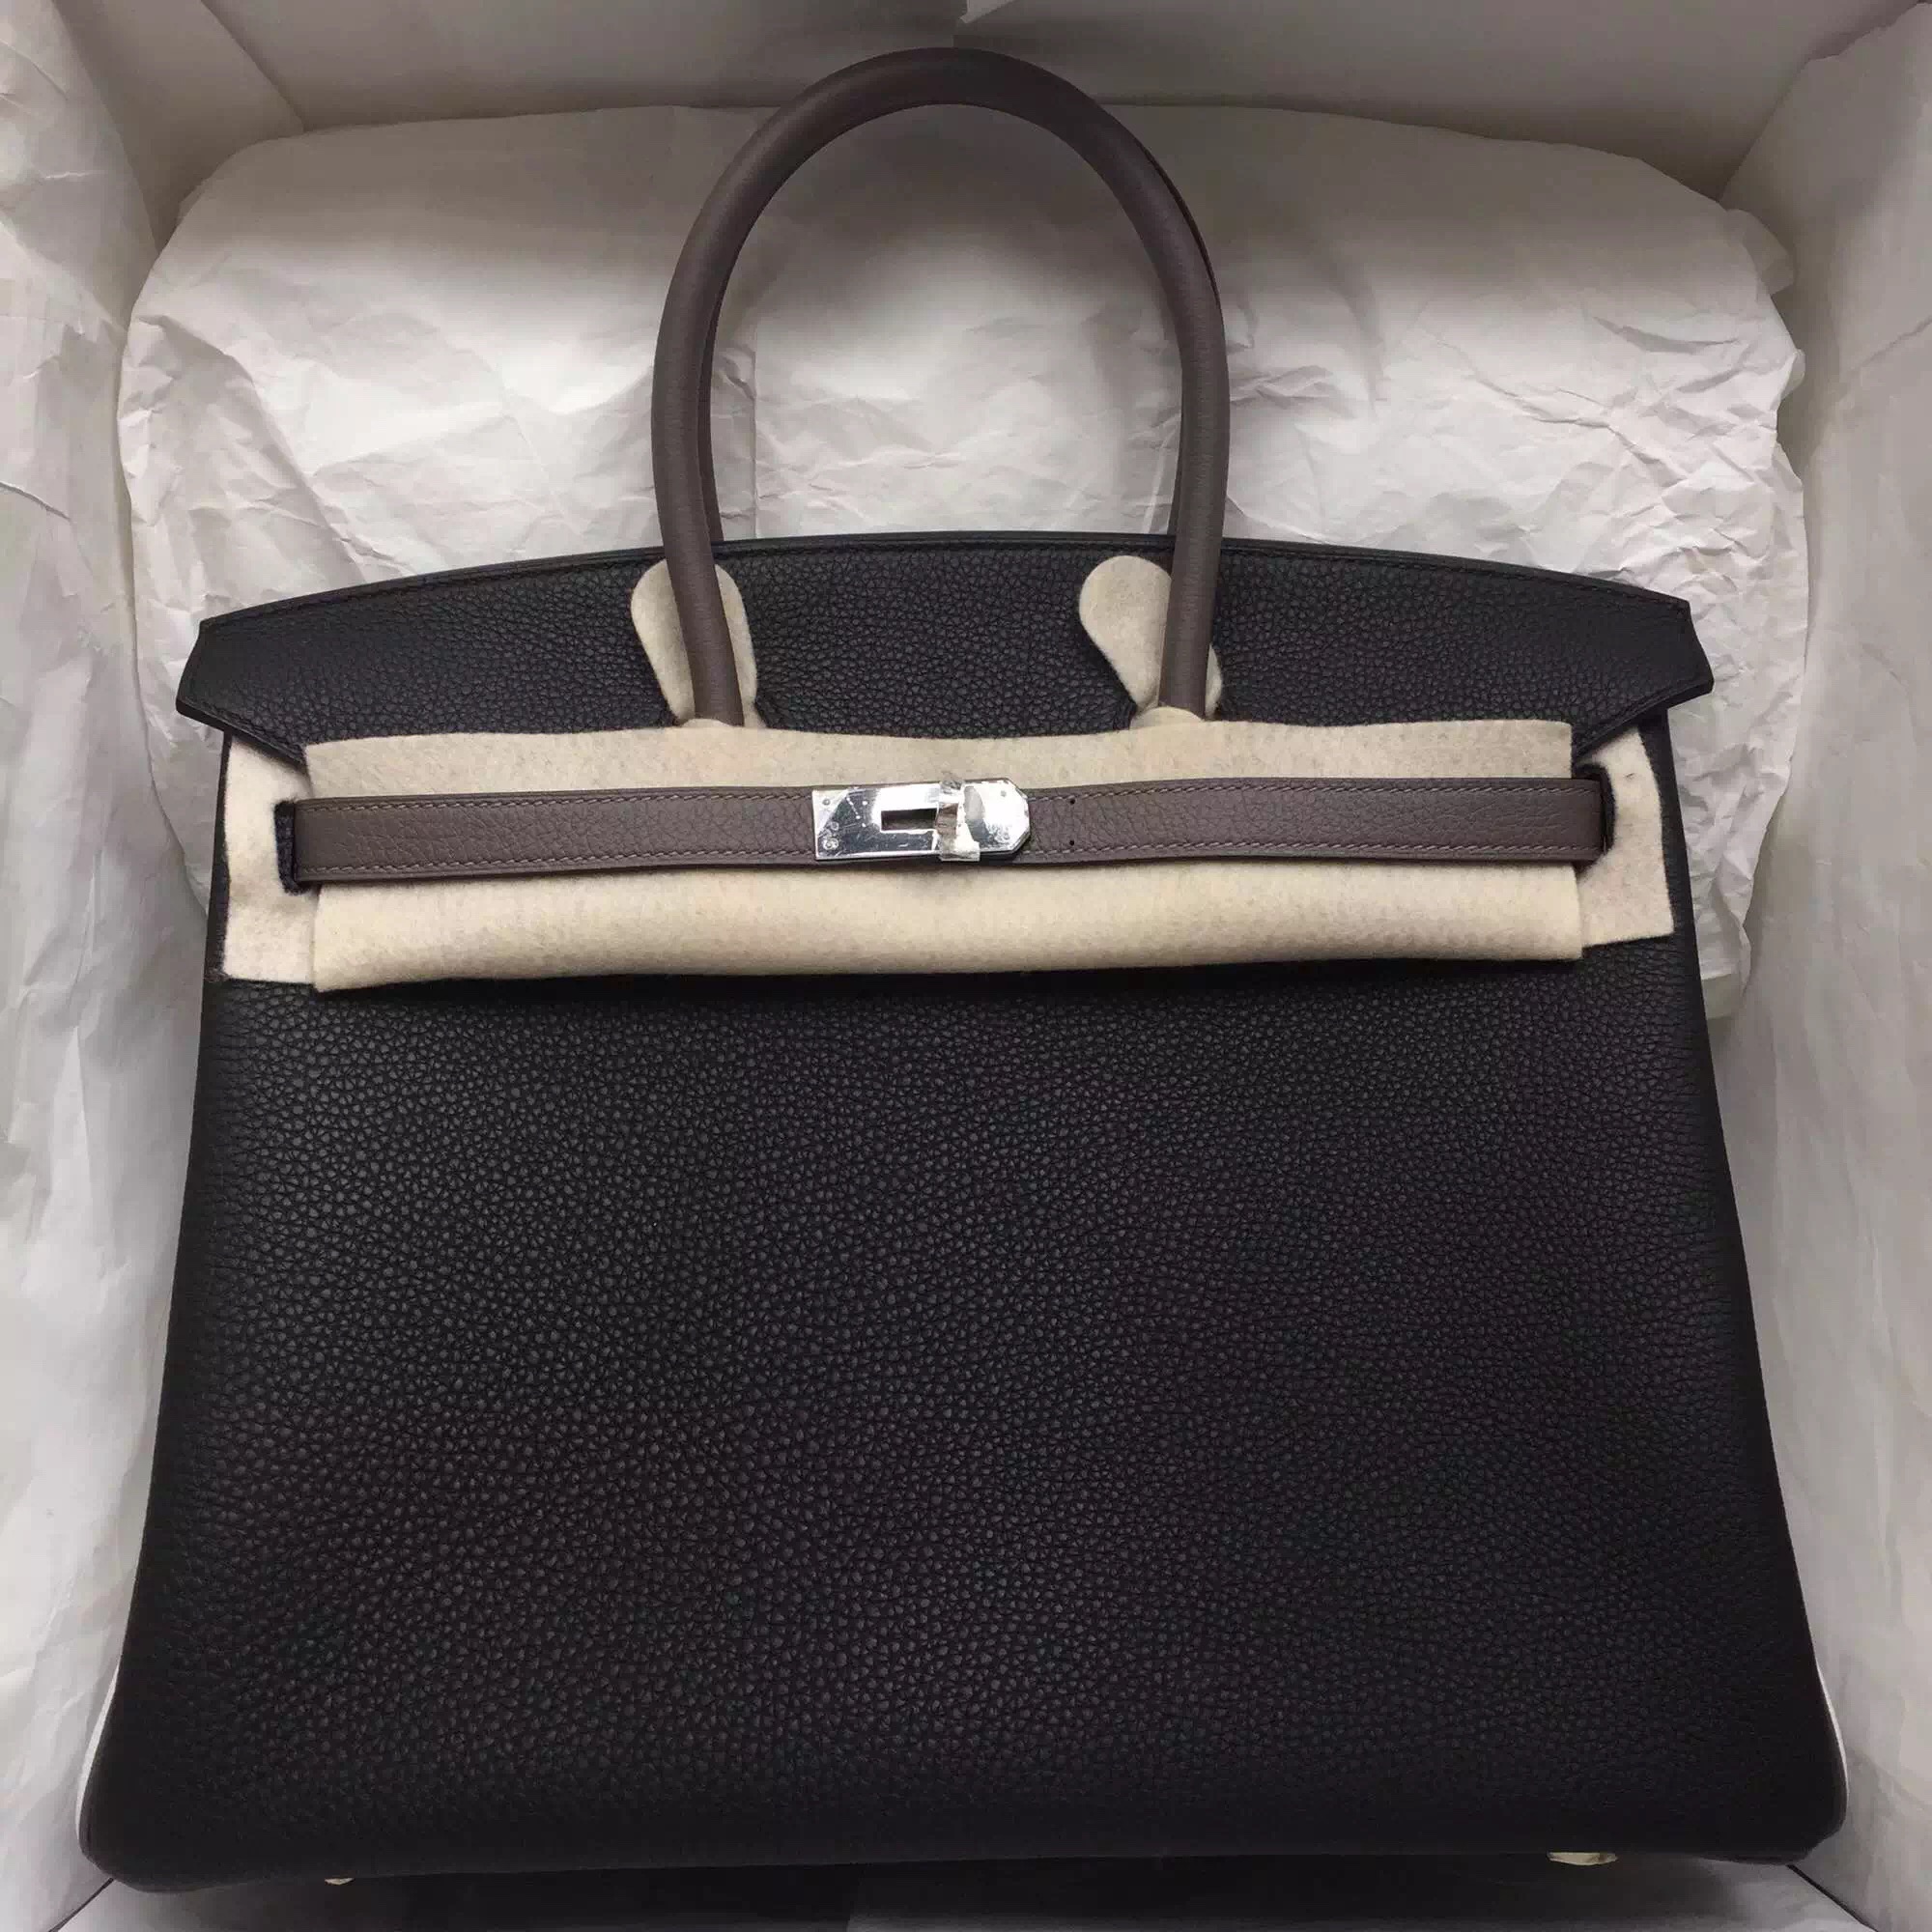 Discount Hermes Black/White/Etain Grey Togo Leather Birkin Bag 30cm Online